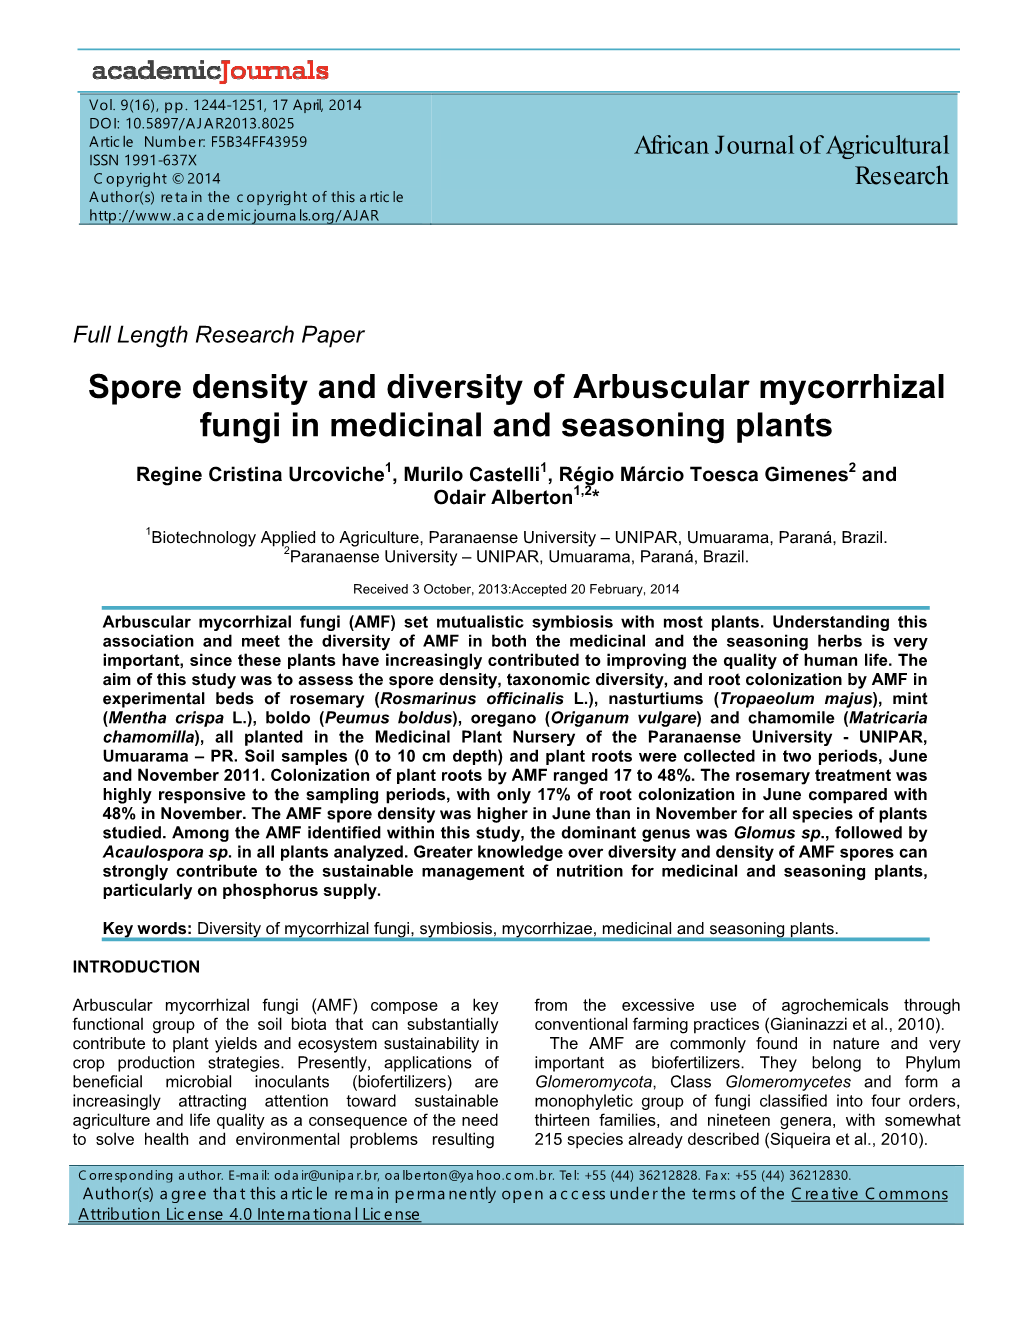 Spore Density and Diversity of Arbuscular Mycorrhizal Fungi in Medicinal and Seasoning Plants